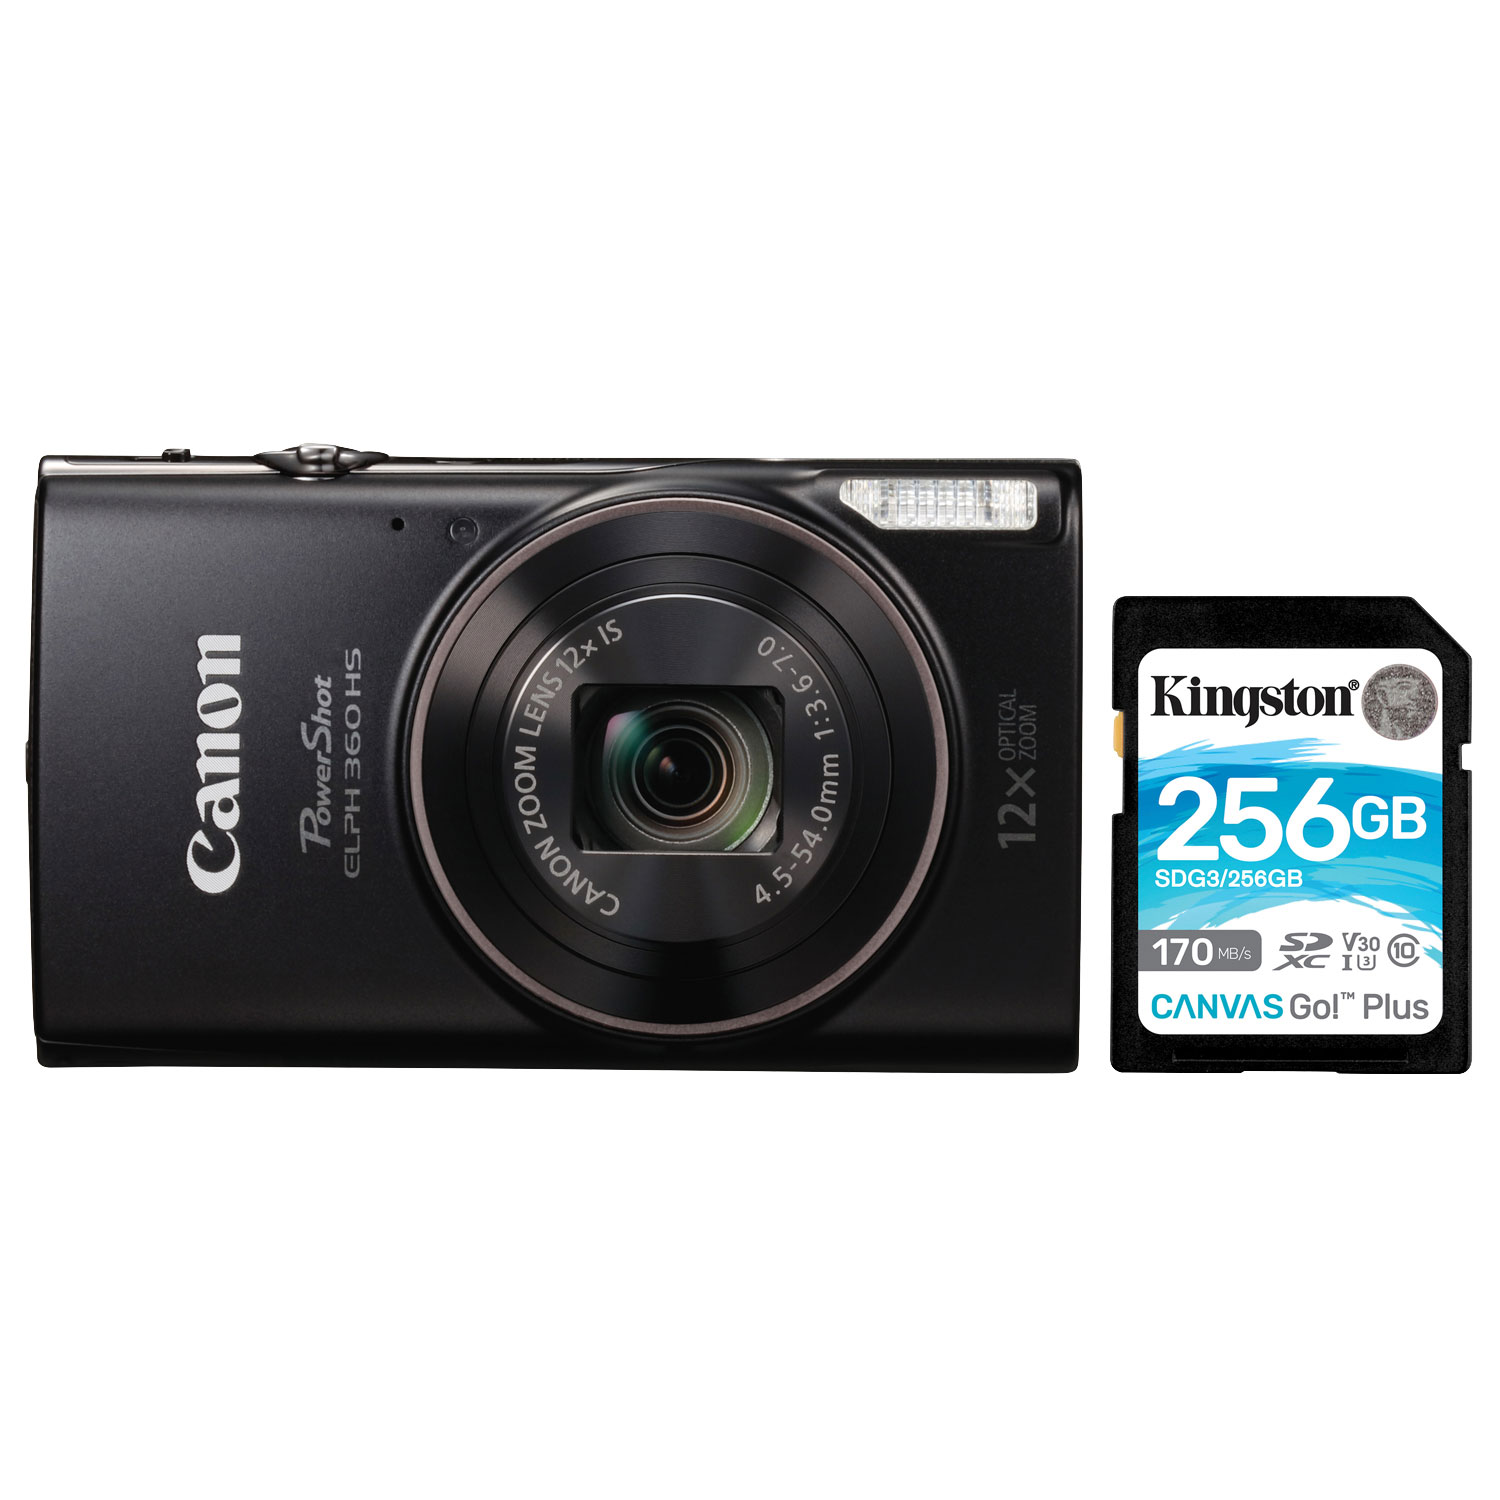 Canon PowerShot ELPH 360 HS WiFi 20.2MP 12x Optical Zoom Digital Camera with 256GB Memory Card - Black